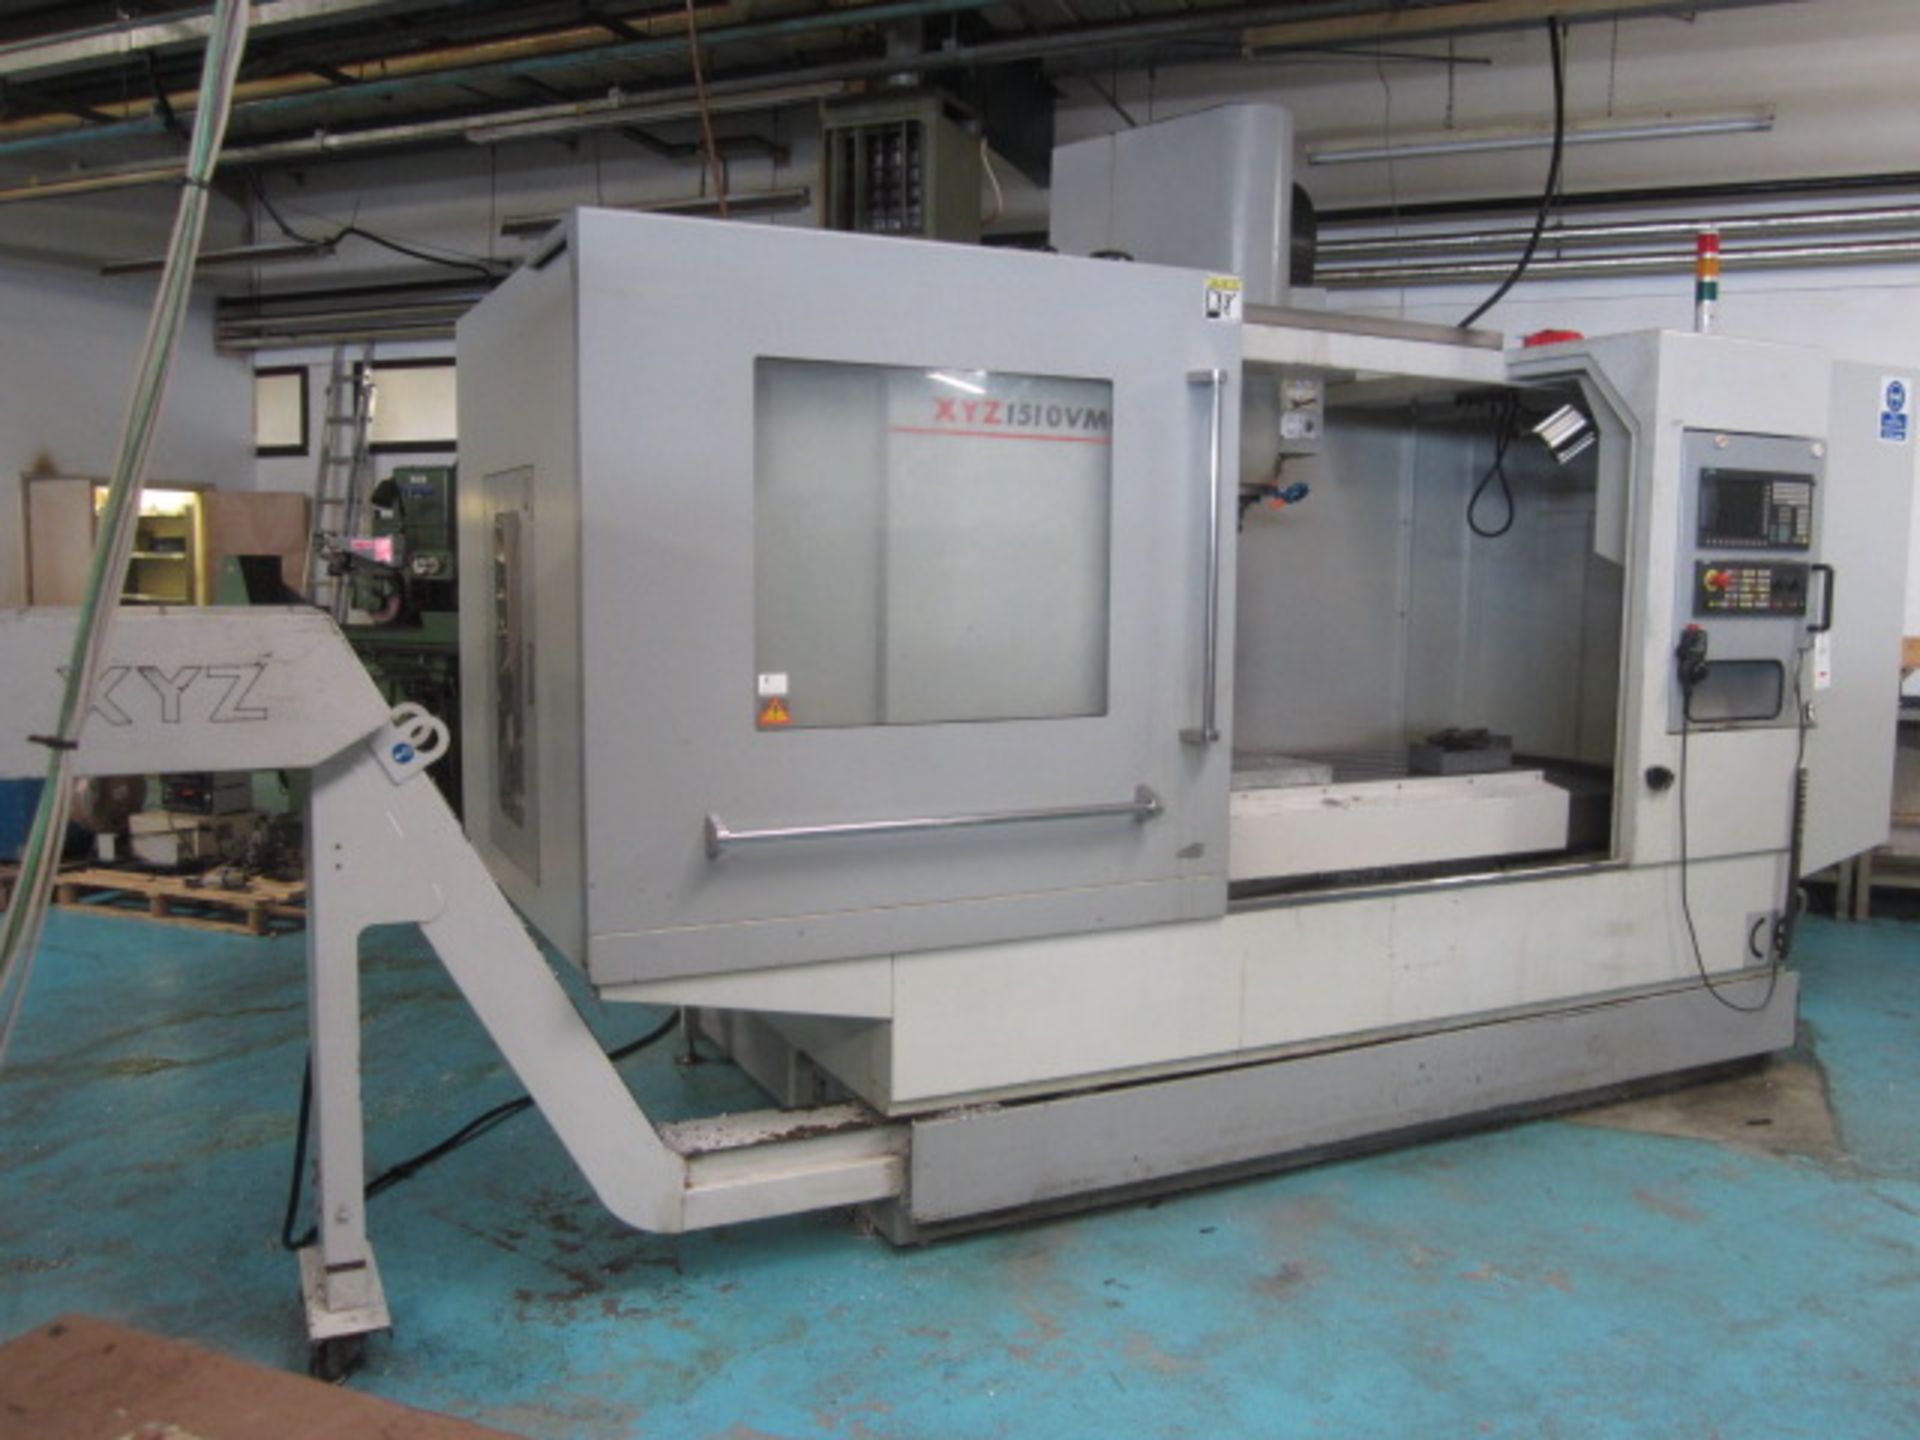 XYZ 1500 VMC-1510 CNC vertical machining centre, serial no: V11060001 (2012), Siemens Sinumerik 828D